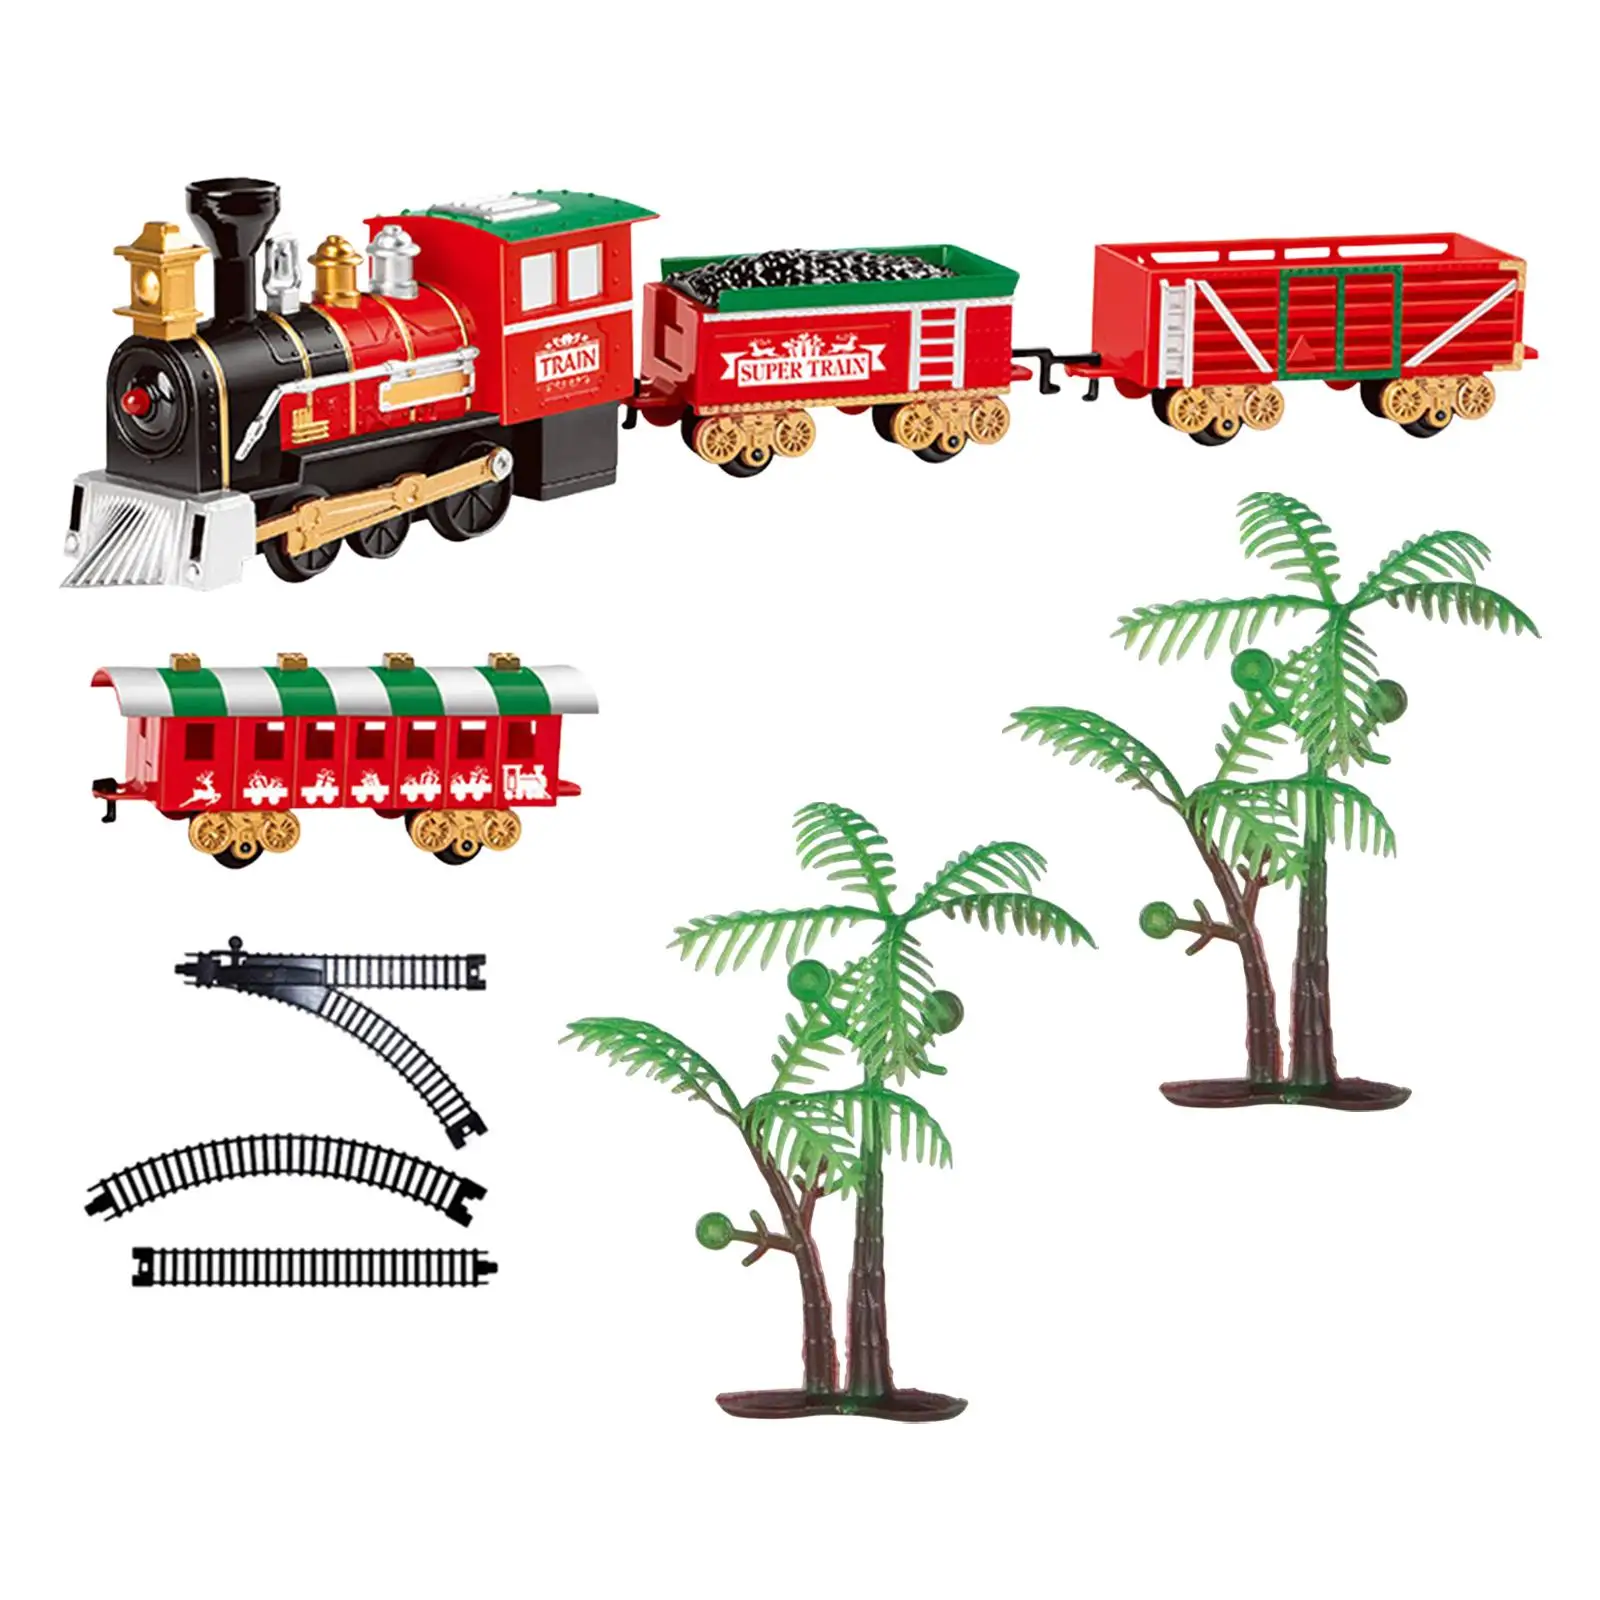 Portable Christmas Train Set Railway Kit Educational Learning Toy Railway Track Set for Kids Children Preschool Toddler